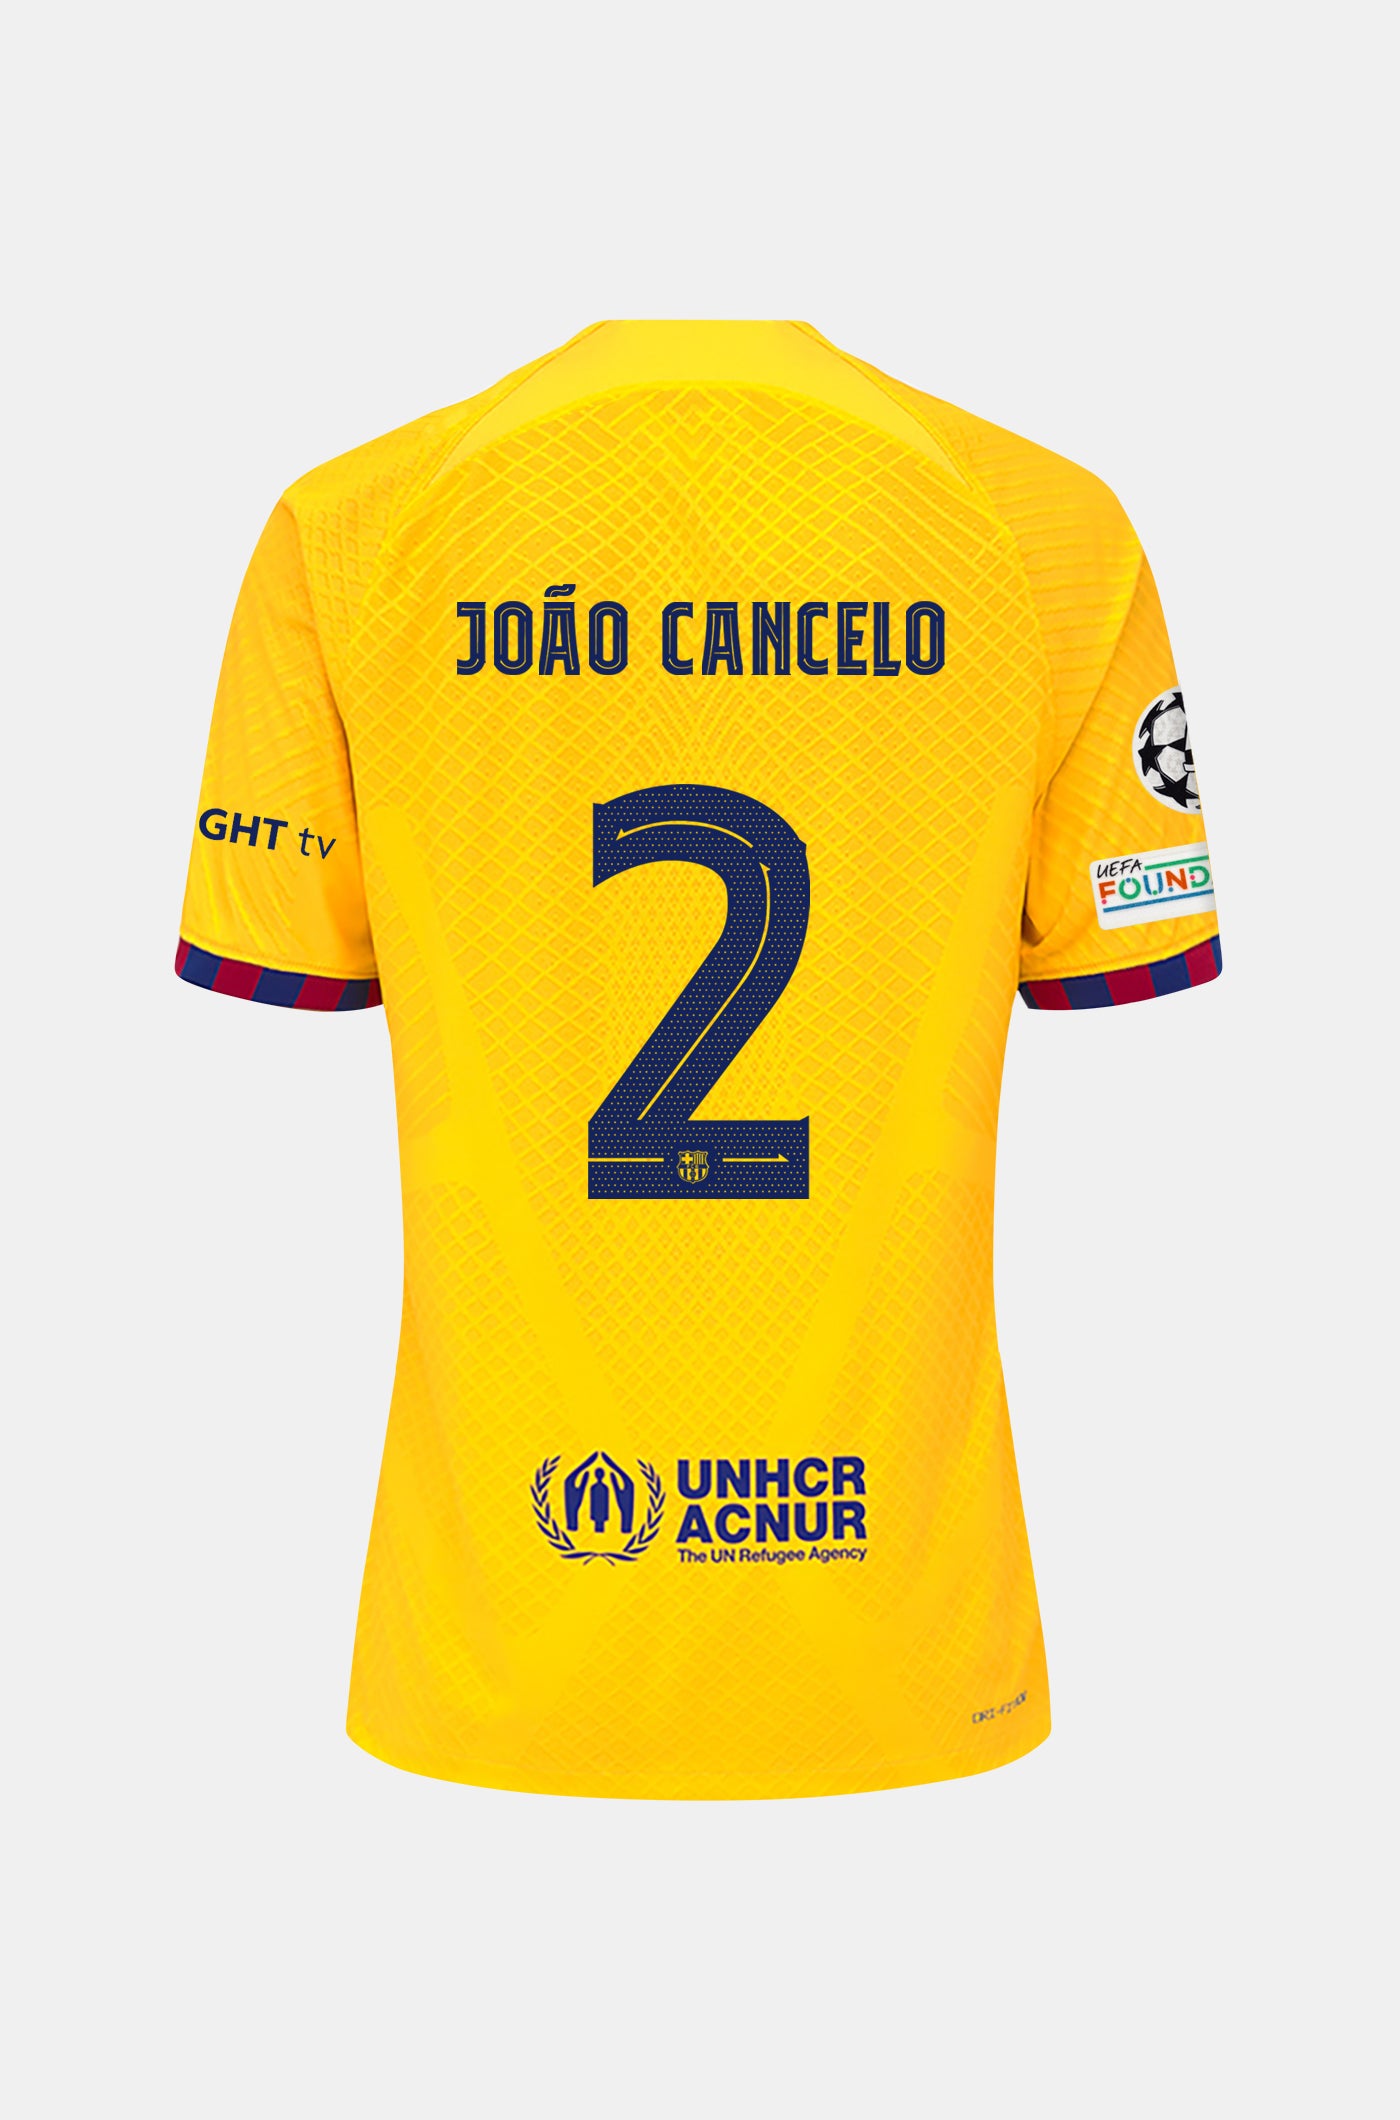 UCL FC Barcelona fourth shirt 23/24 Player’s Edition - JOÃO CANCELO